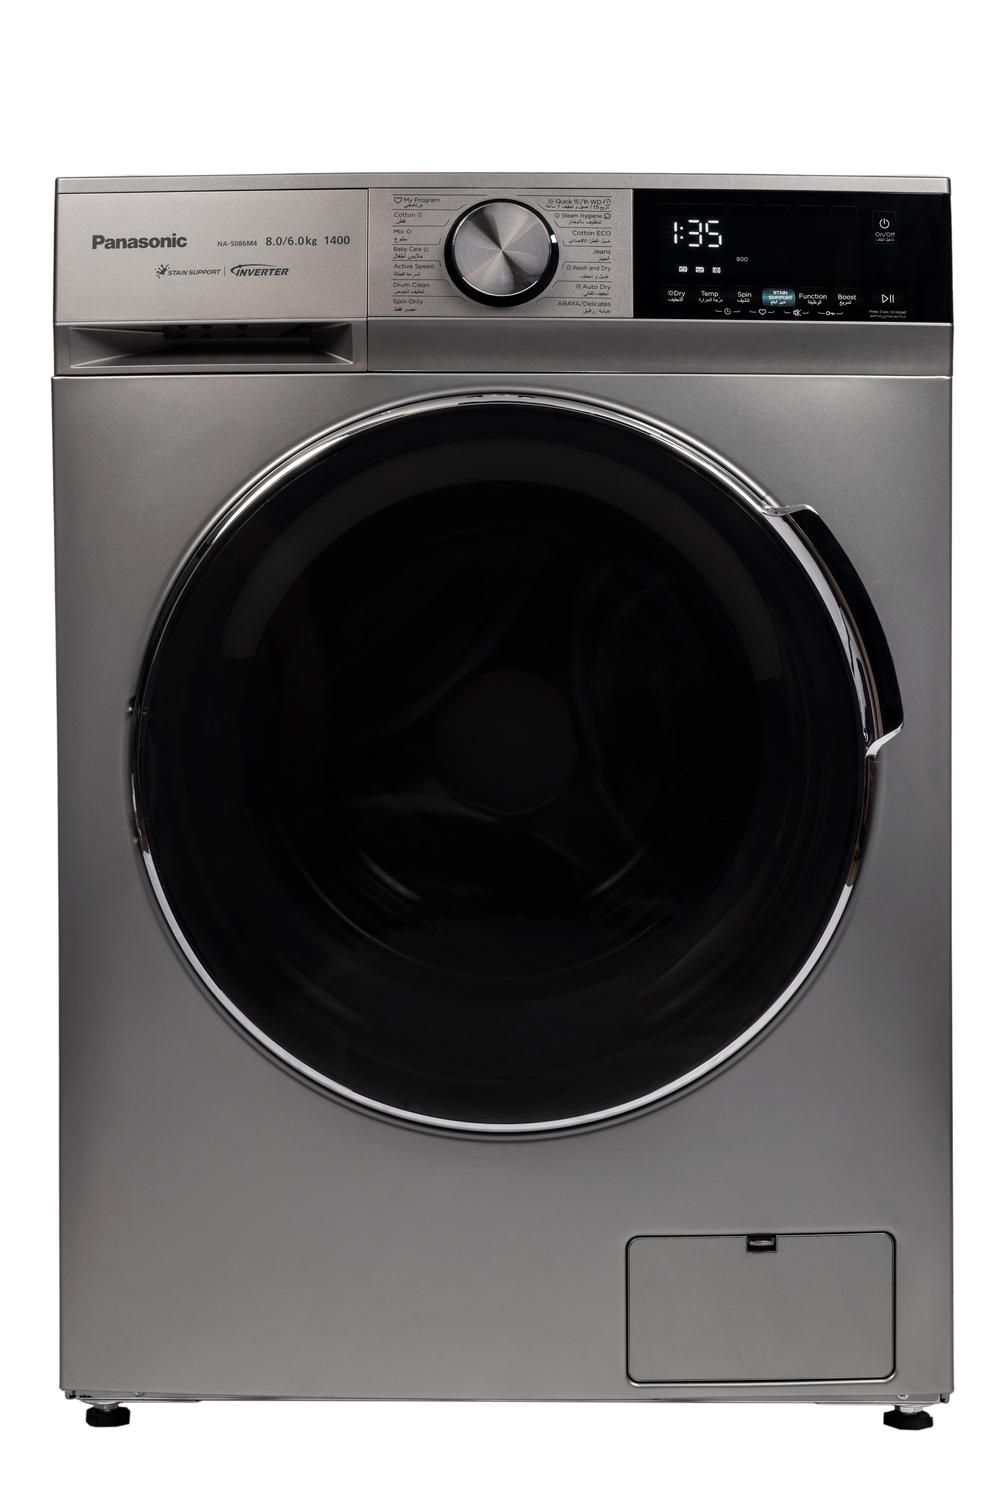 Panasonic 8/6 Kg Washer & Dryer | Silver  - Modern Electronics